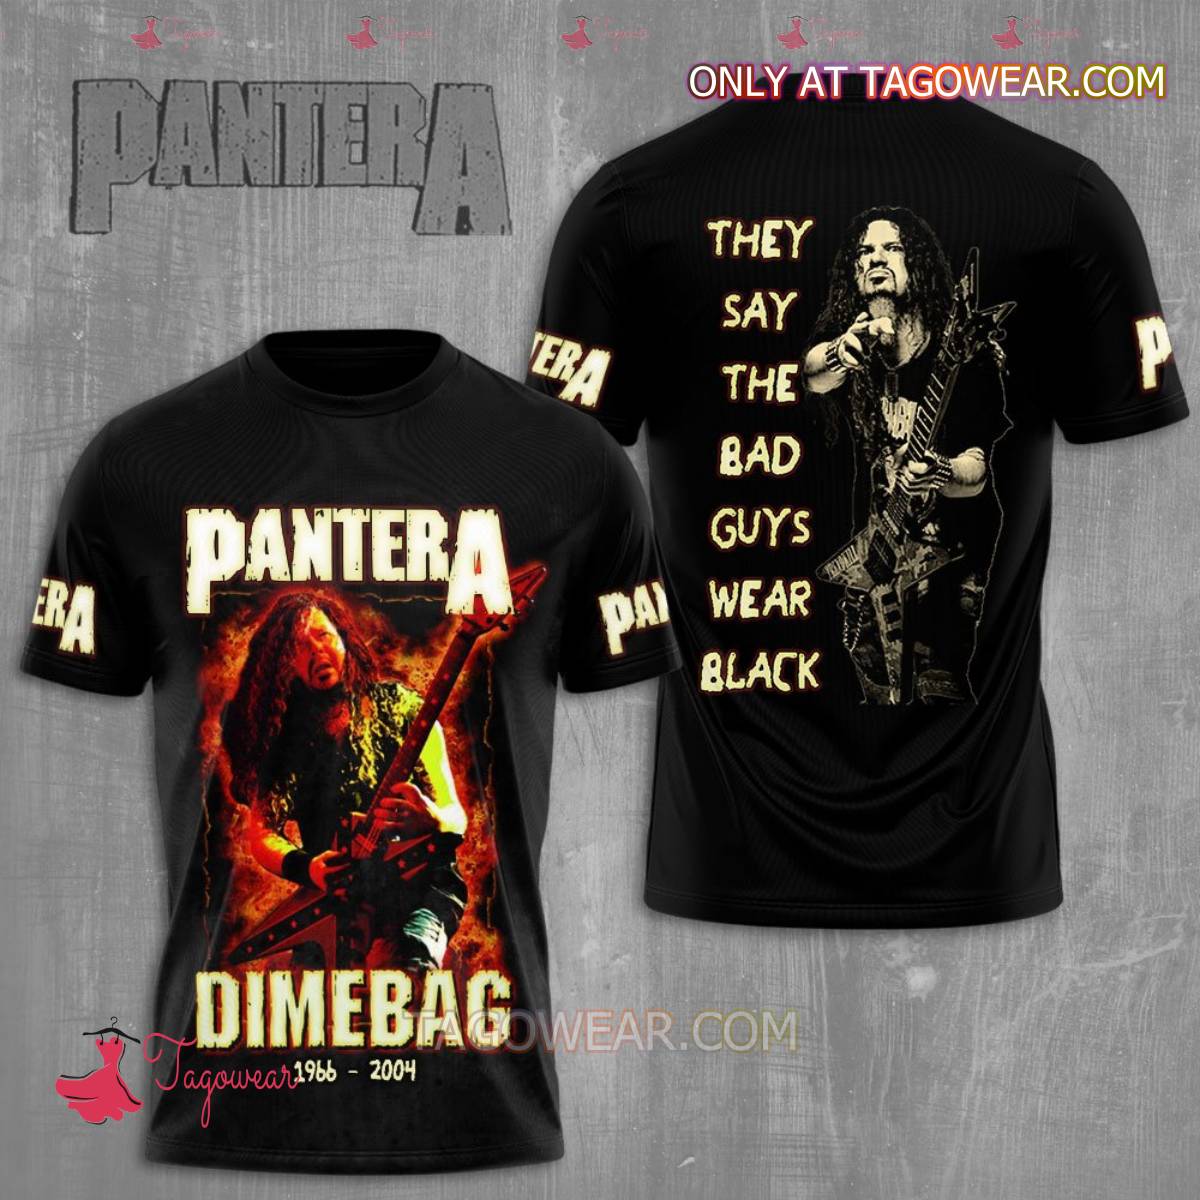 Pantera Dimebag They Say The Bad Guys Wear Black T-shirt, Hoodie